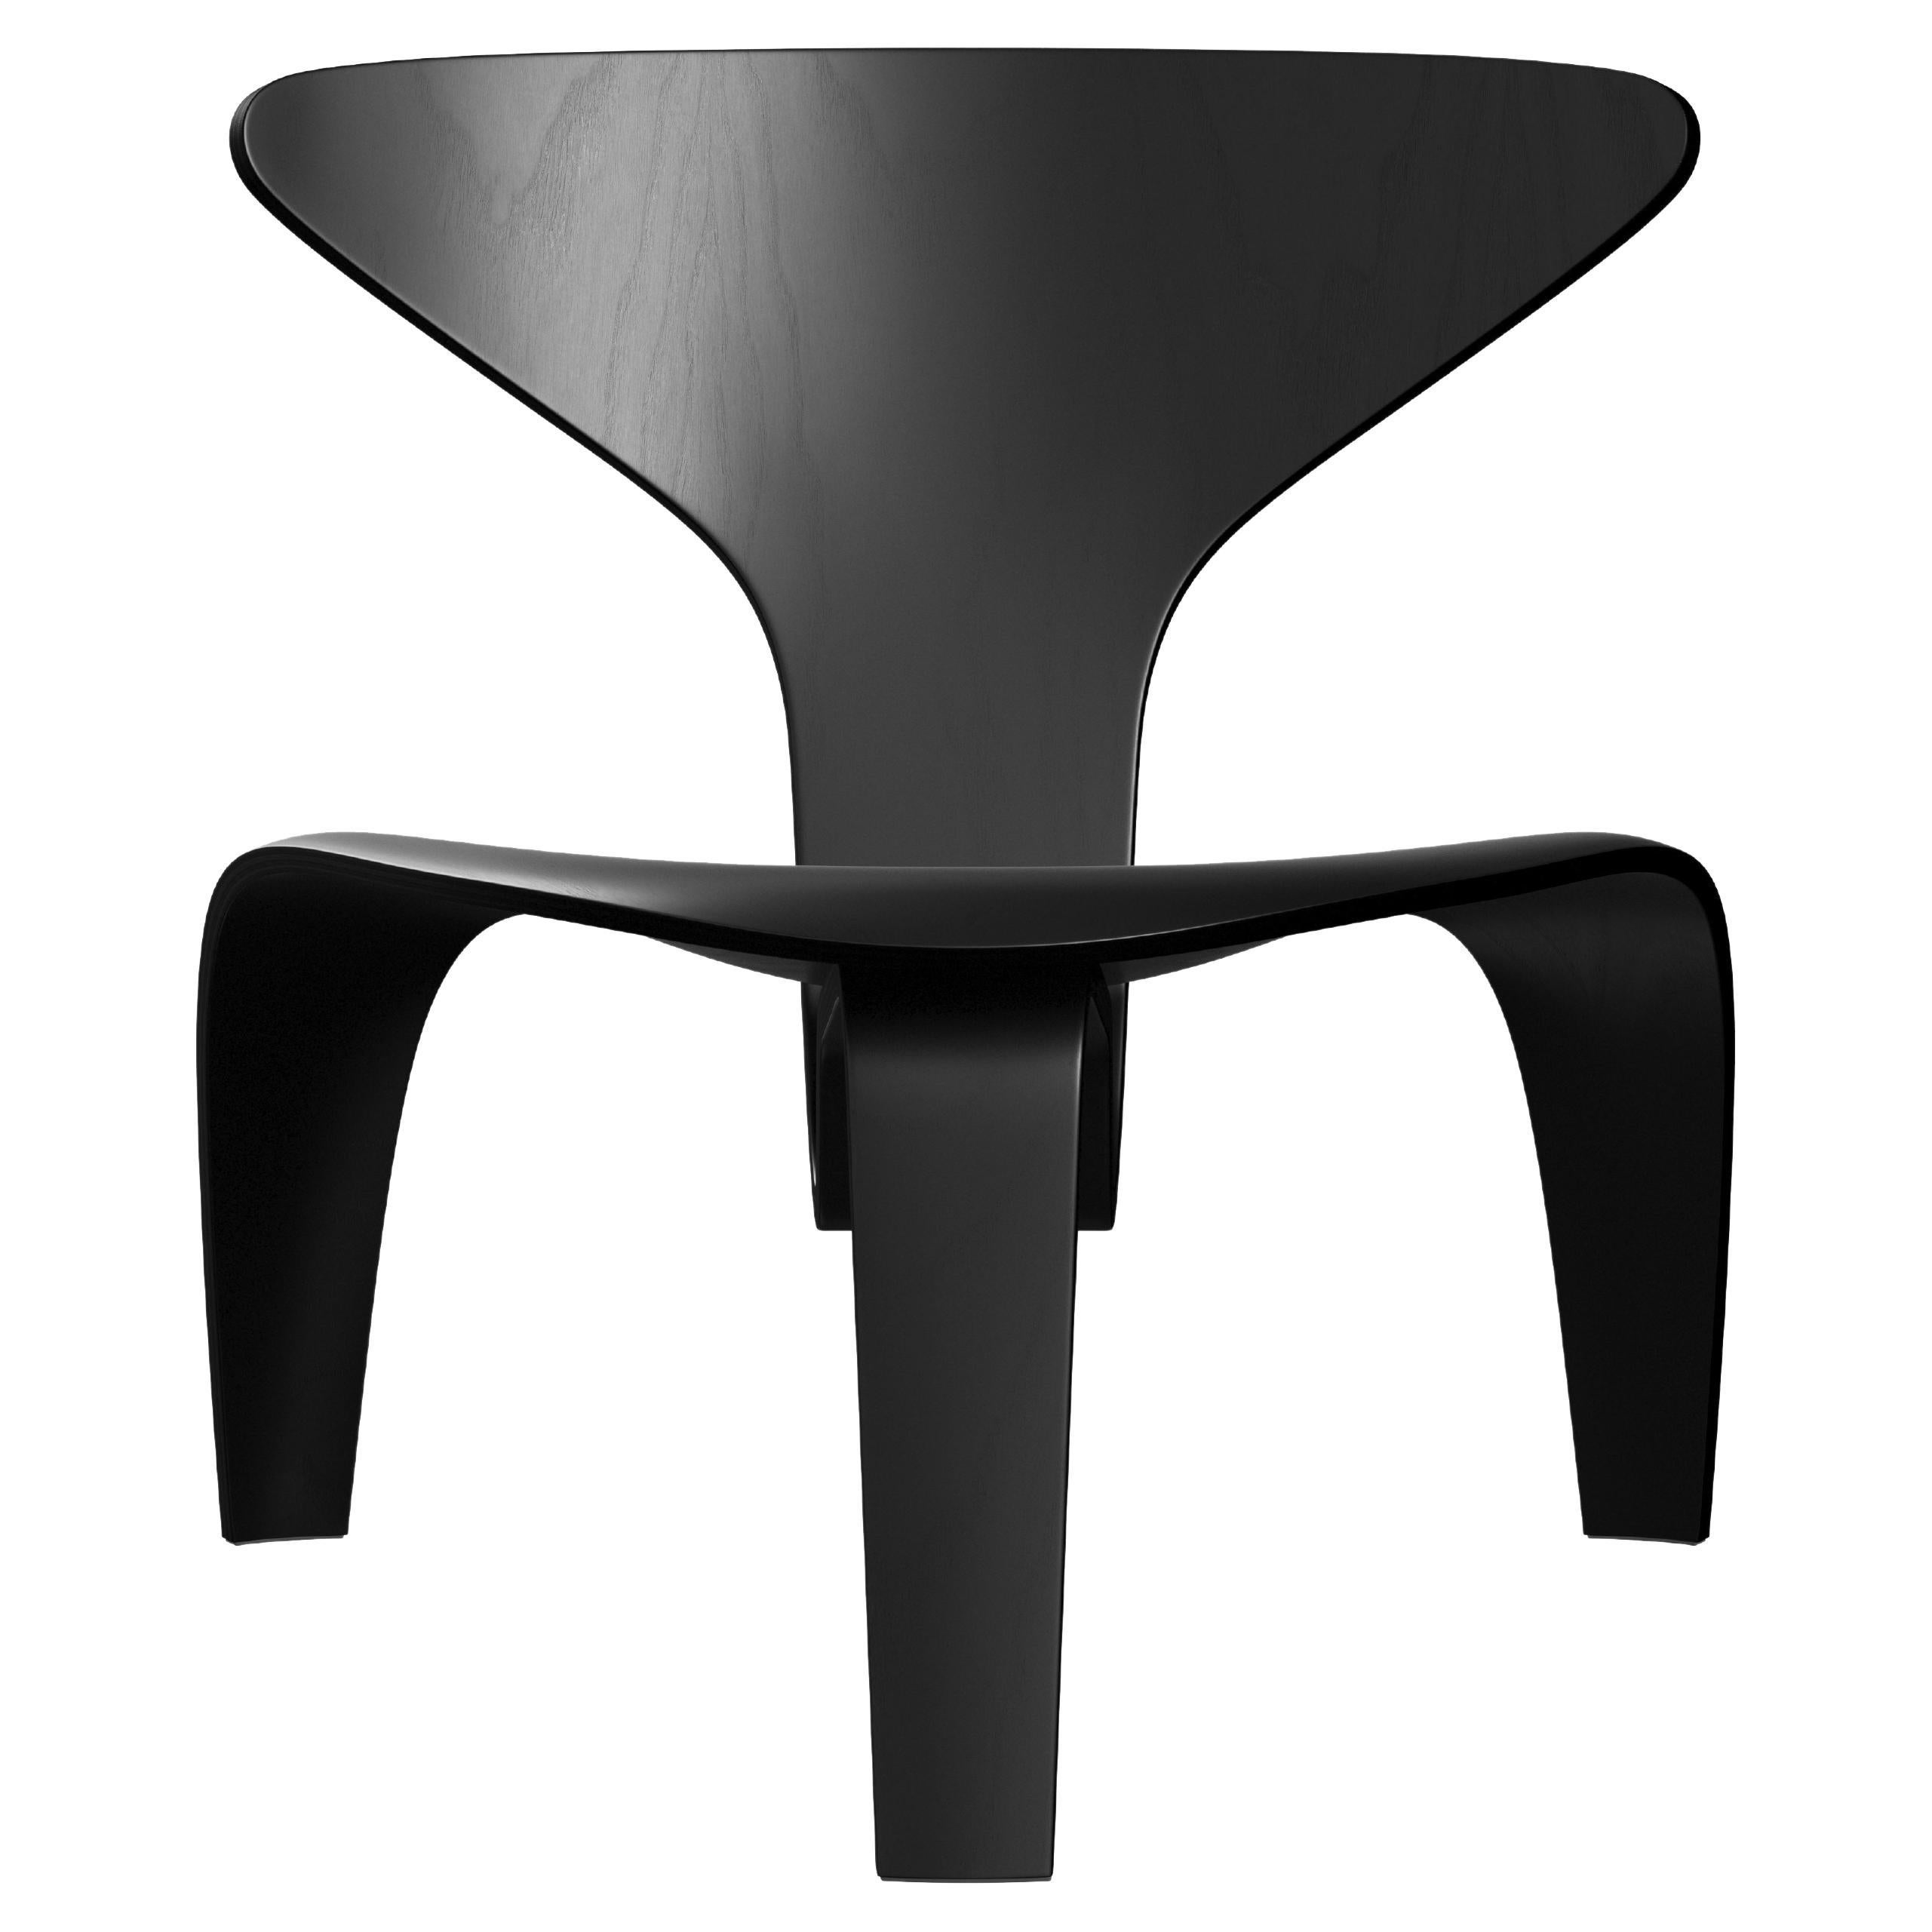 Poul Kjærholm 'PK0 A' Chair for Fritz Hansen in Black Colored Ash